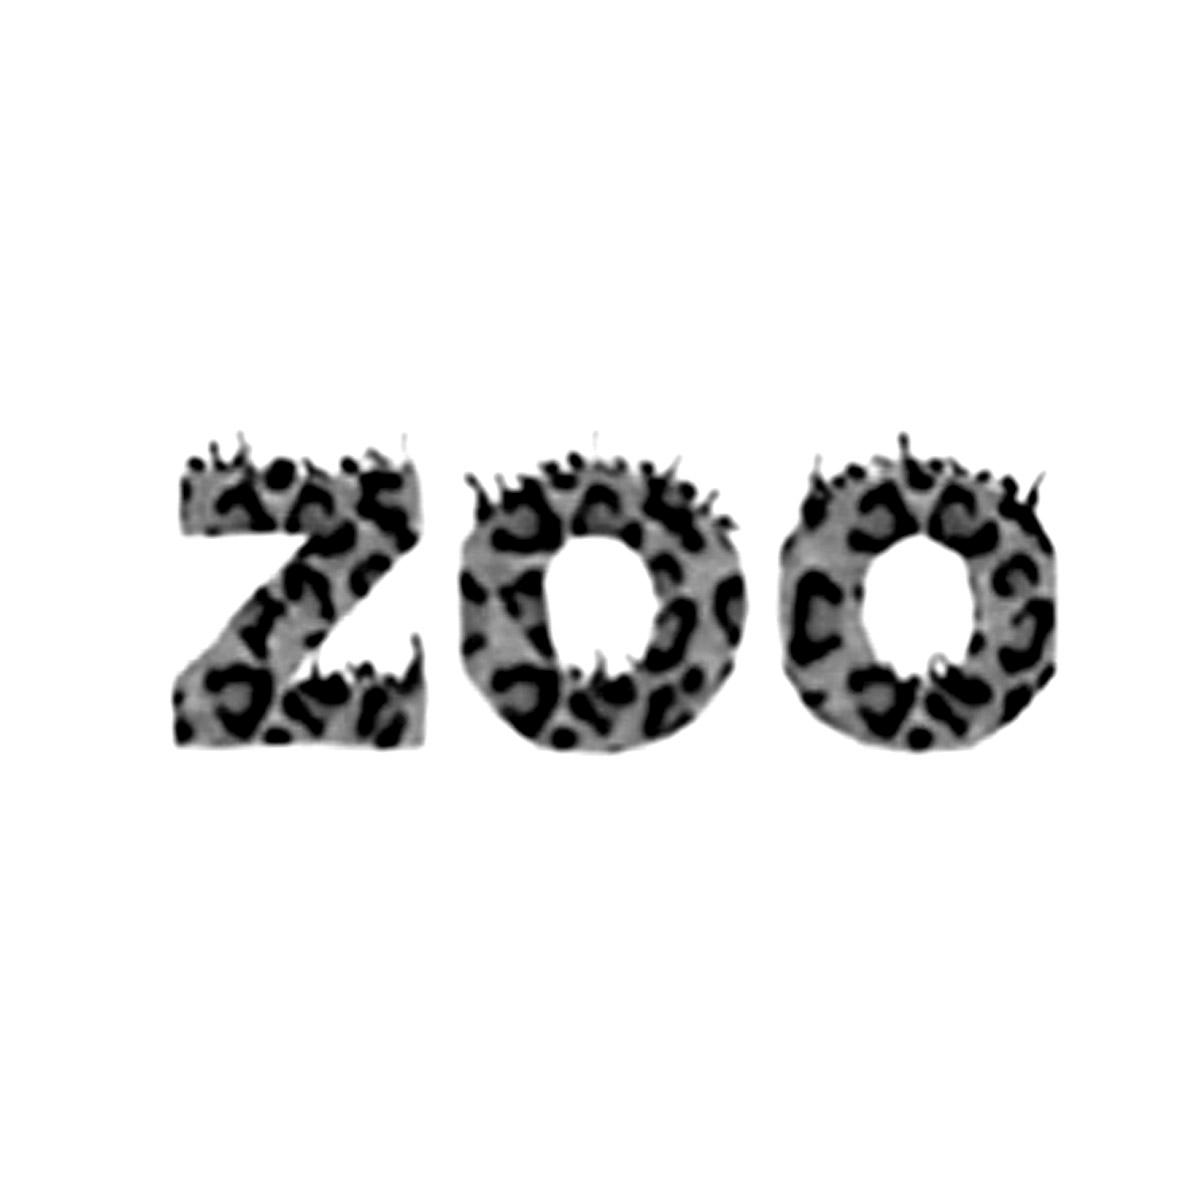 ZOO榨水果商标转让费用买卖交易流程